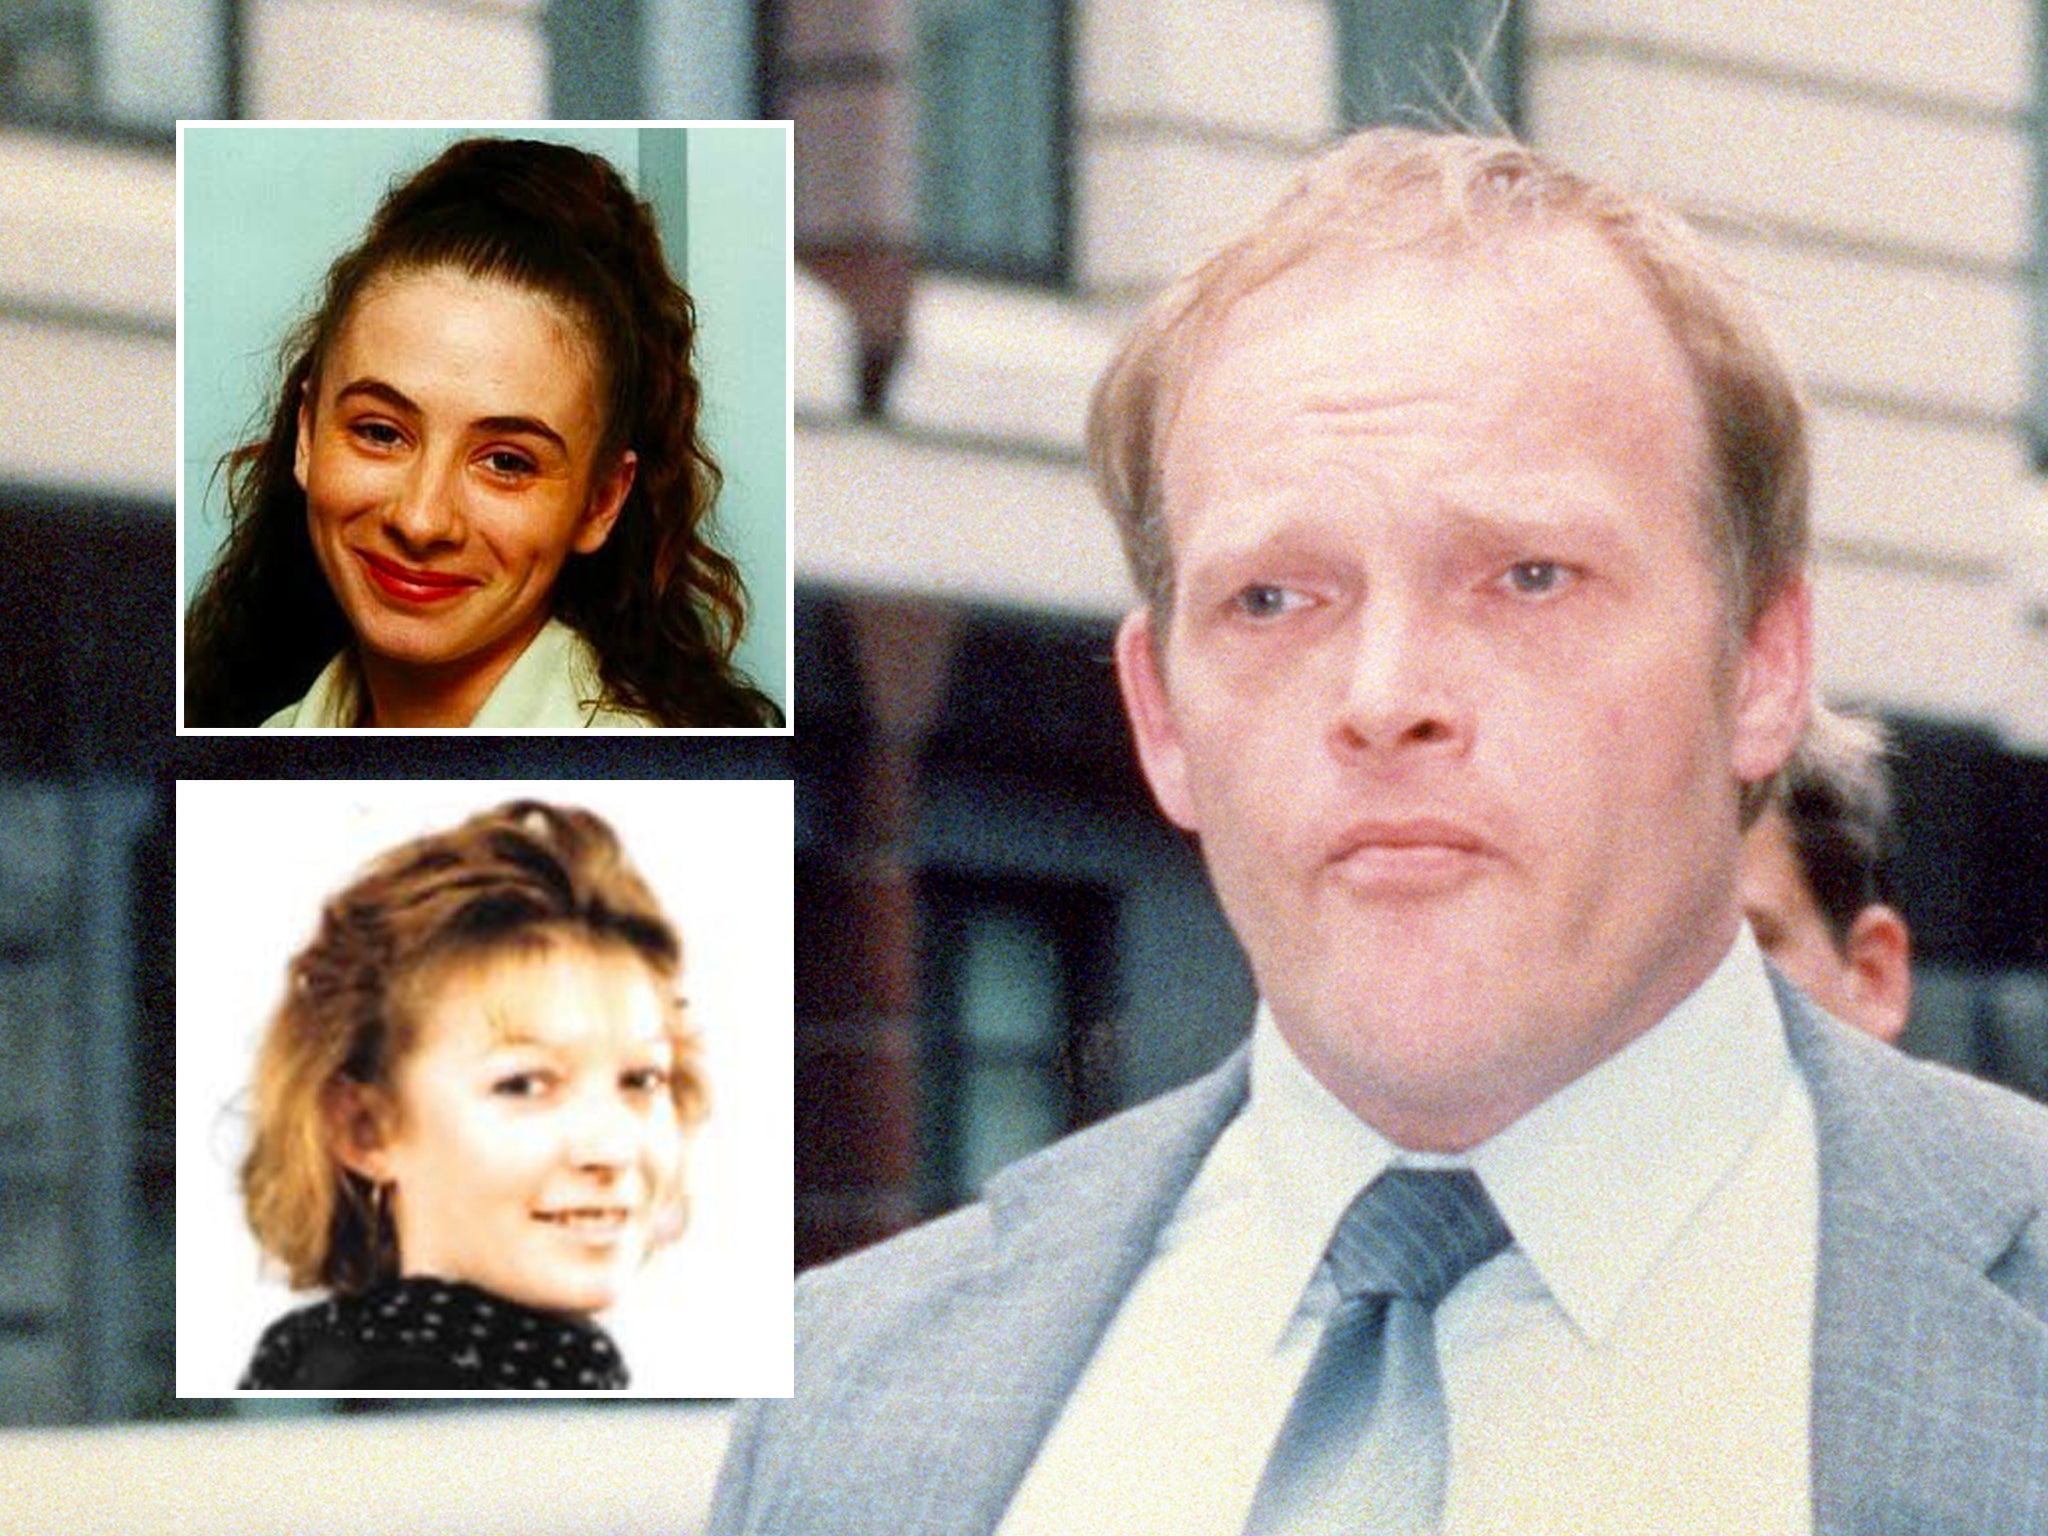 David Smith killed Sarah Crump (bottom left) and Amanda Walker (top left) eight years later